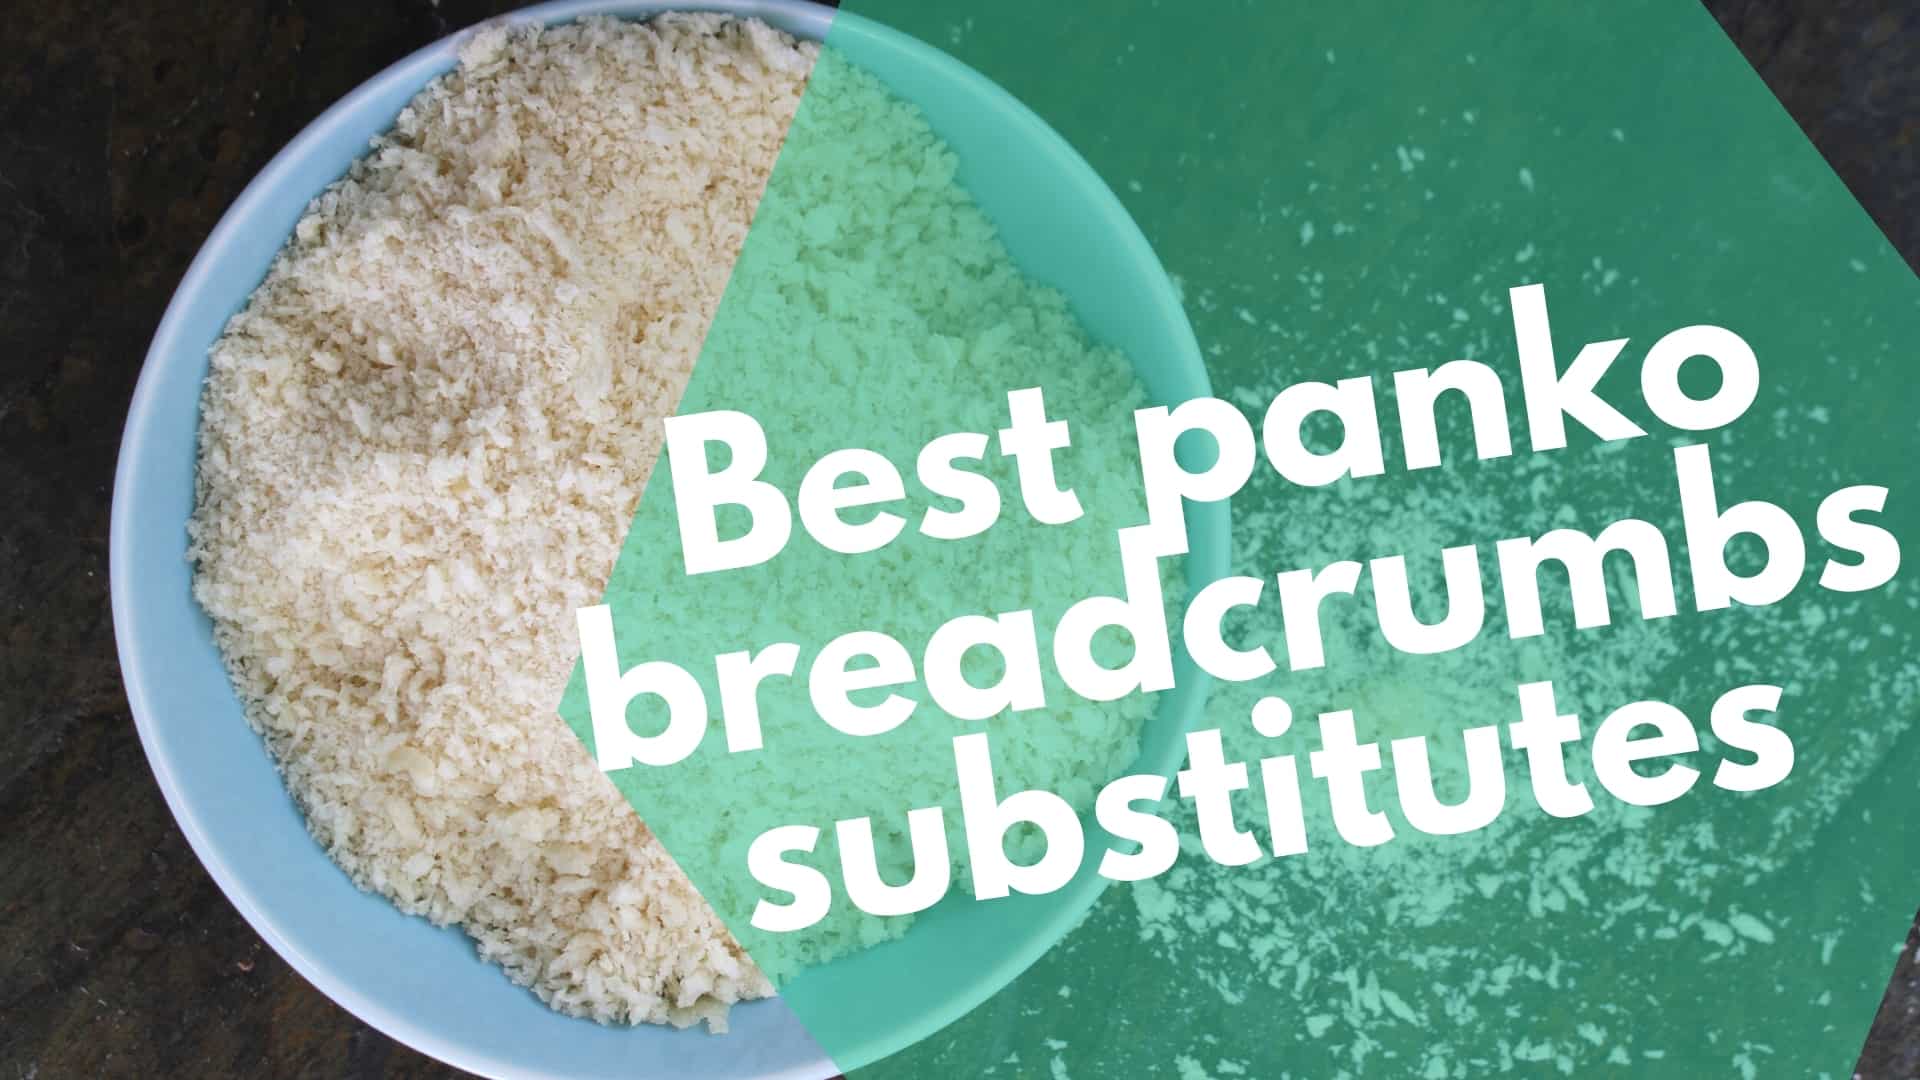 bread crumb substitute in meatballs